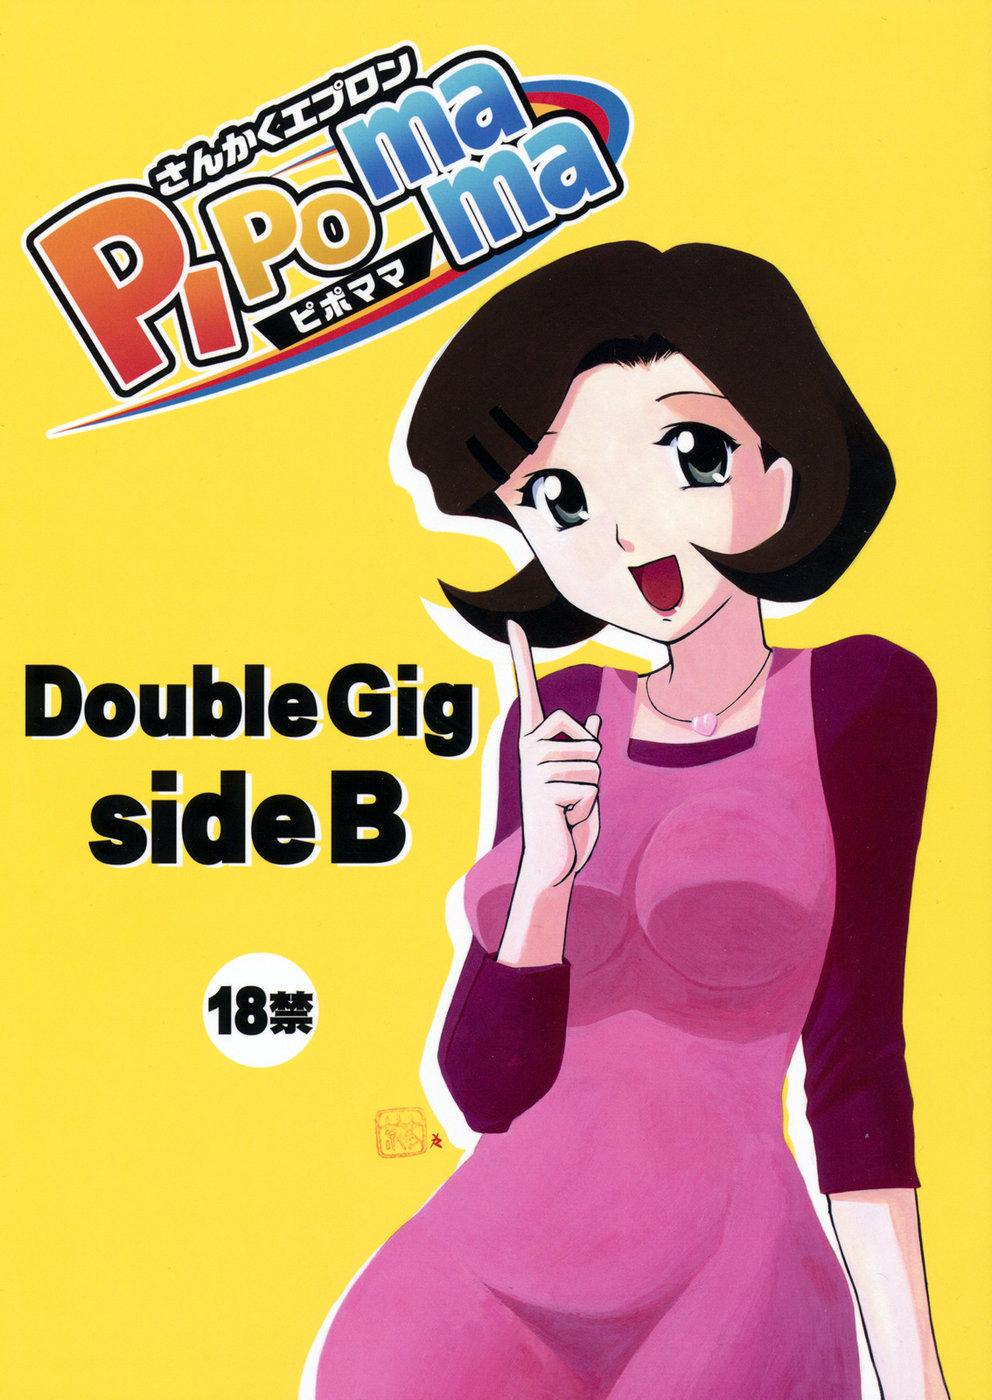 Double Gig Side B - PiPoMama 0